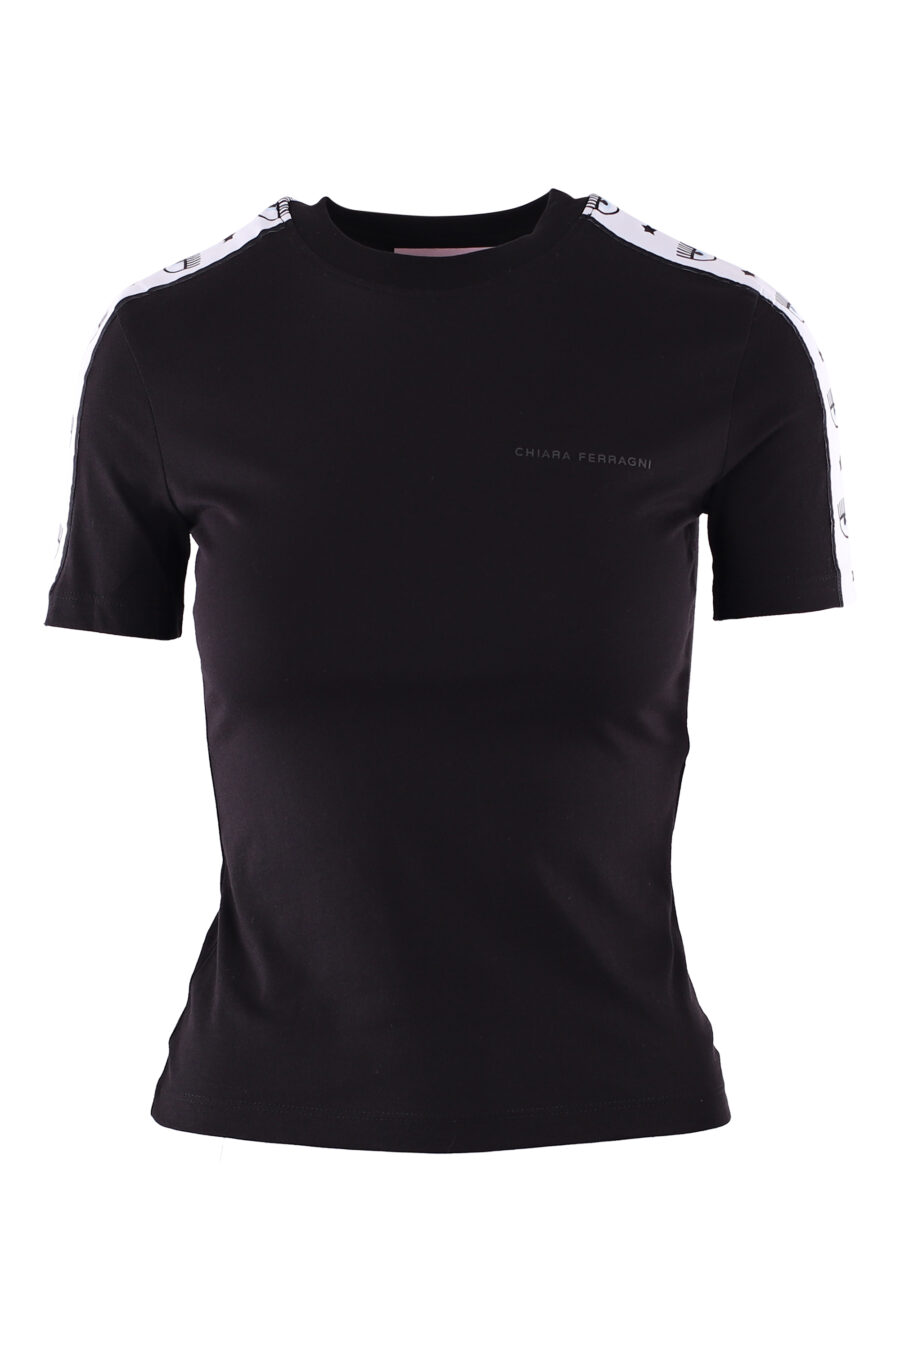 Camiseta negra con logo ojo en cinta mangas - IMG 6104